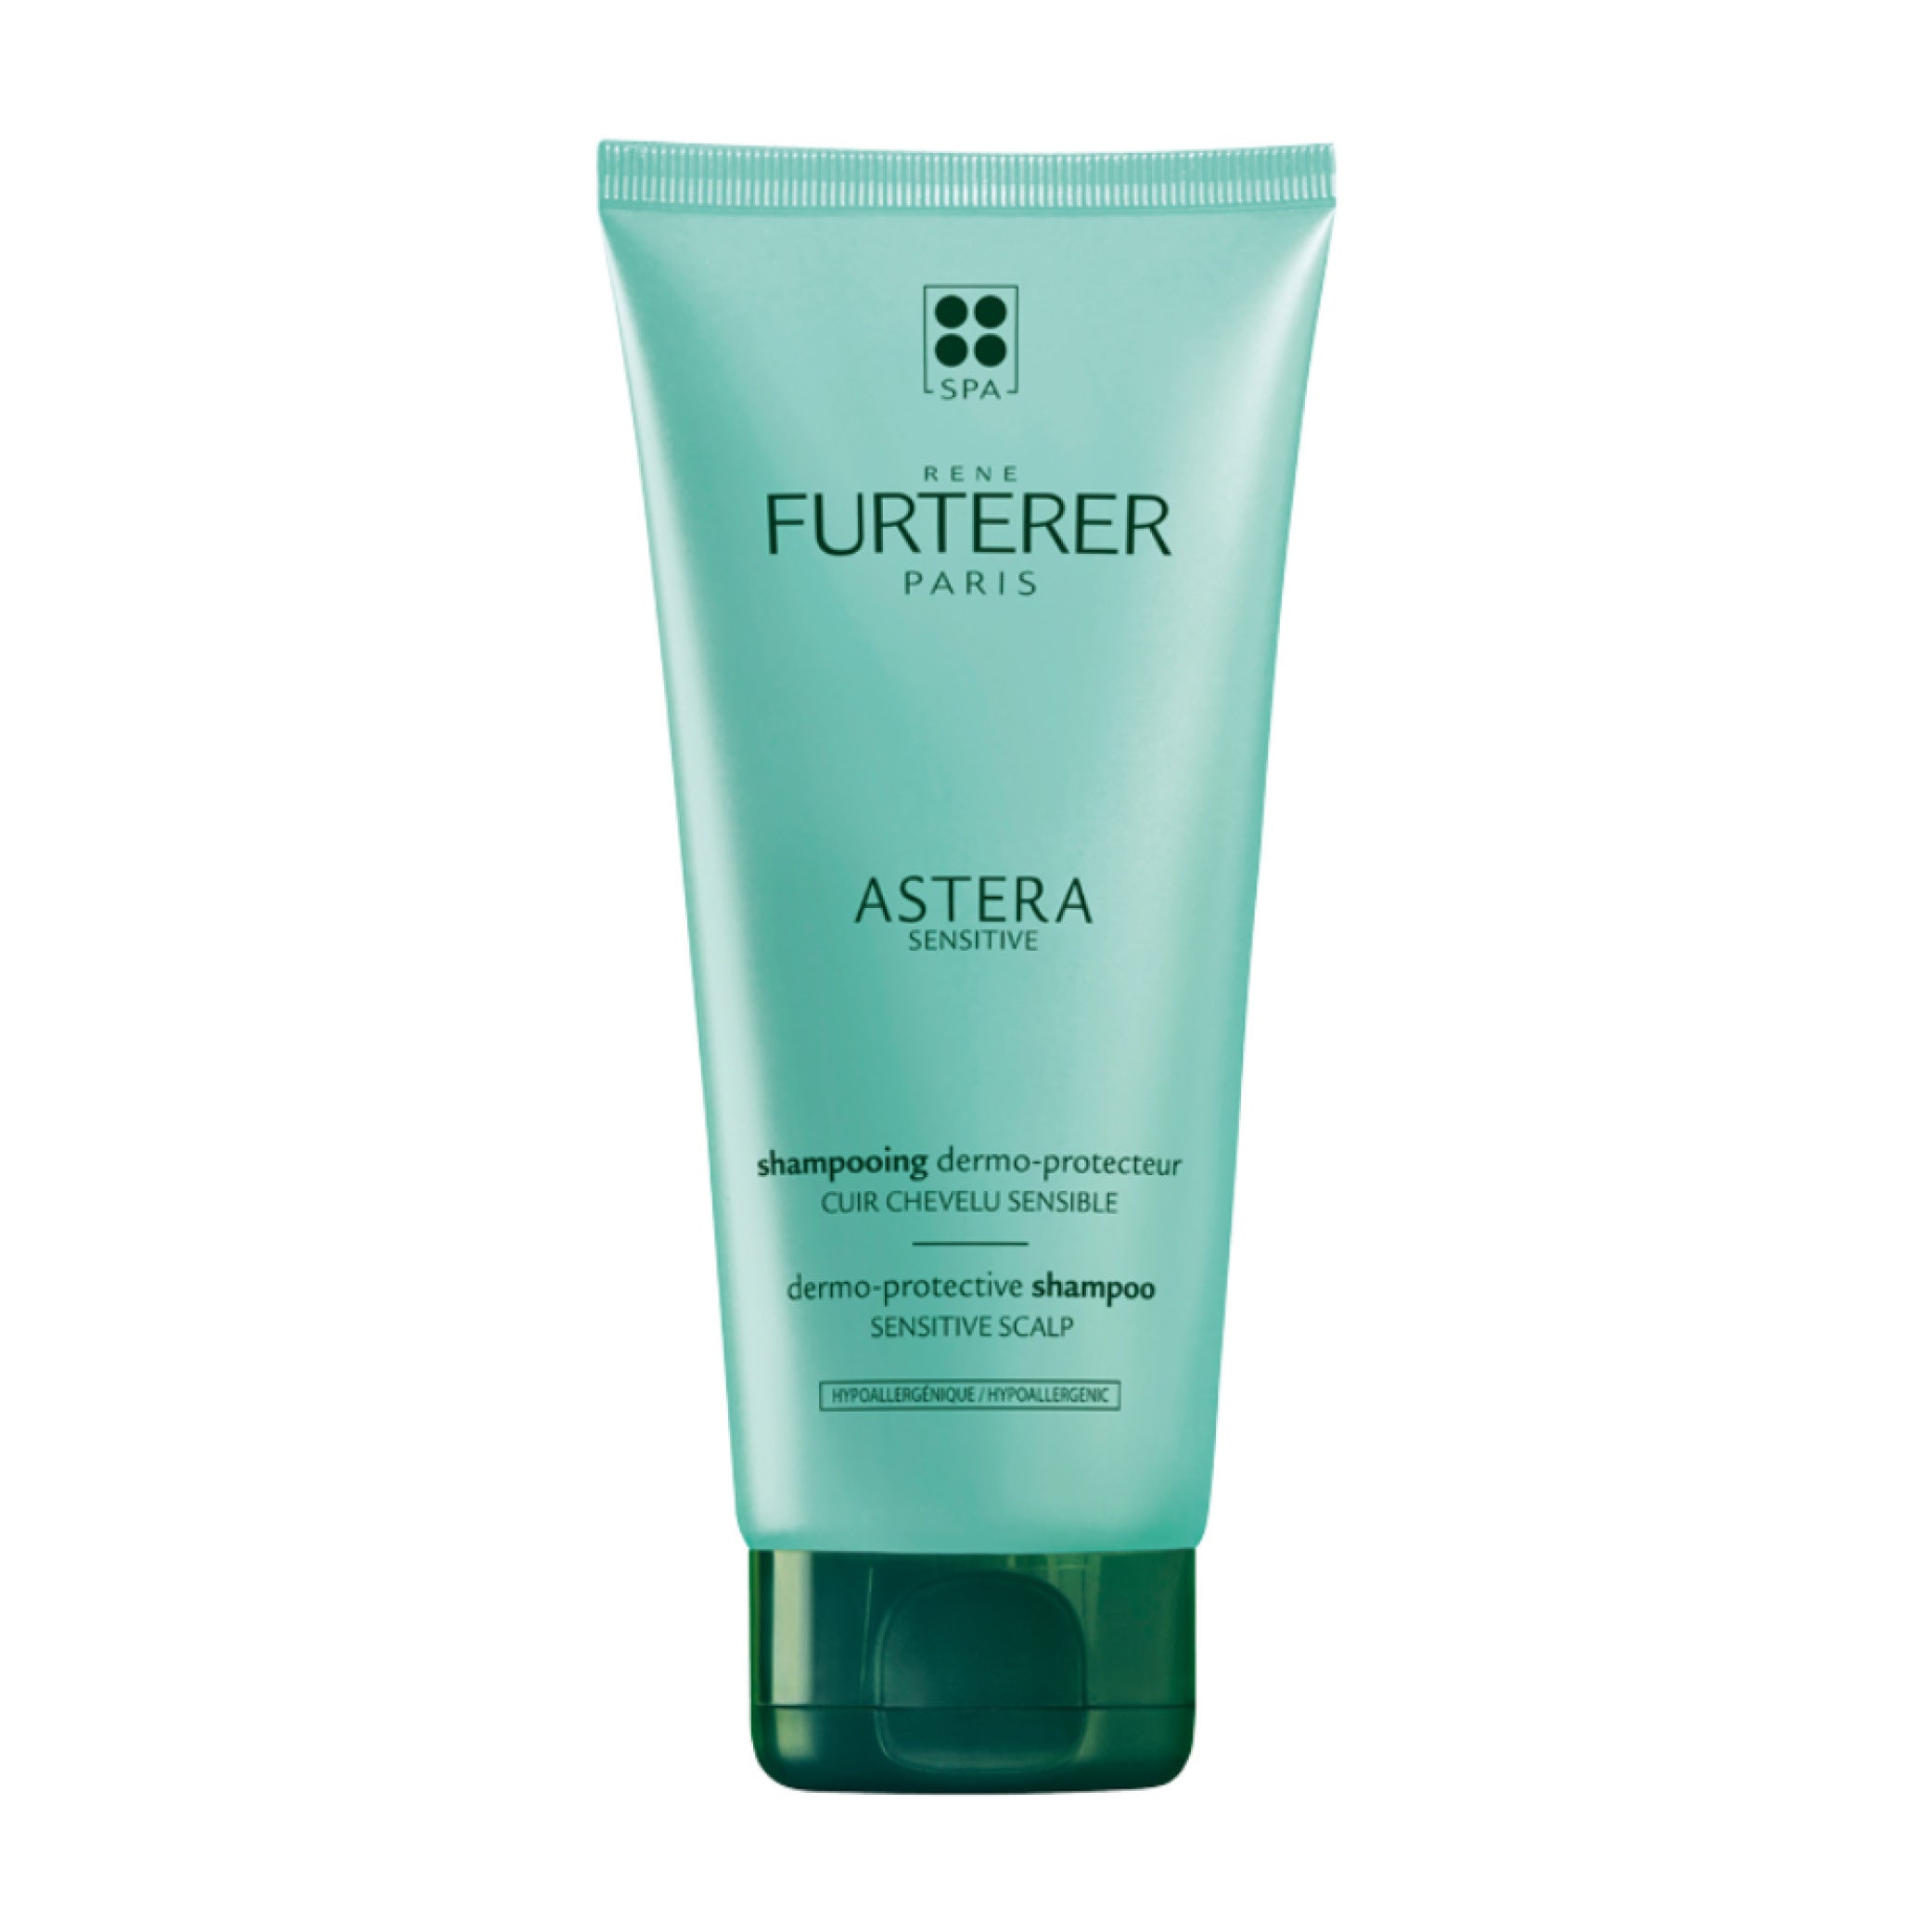 Astera Sensitive Shampoo Hight Tolerance